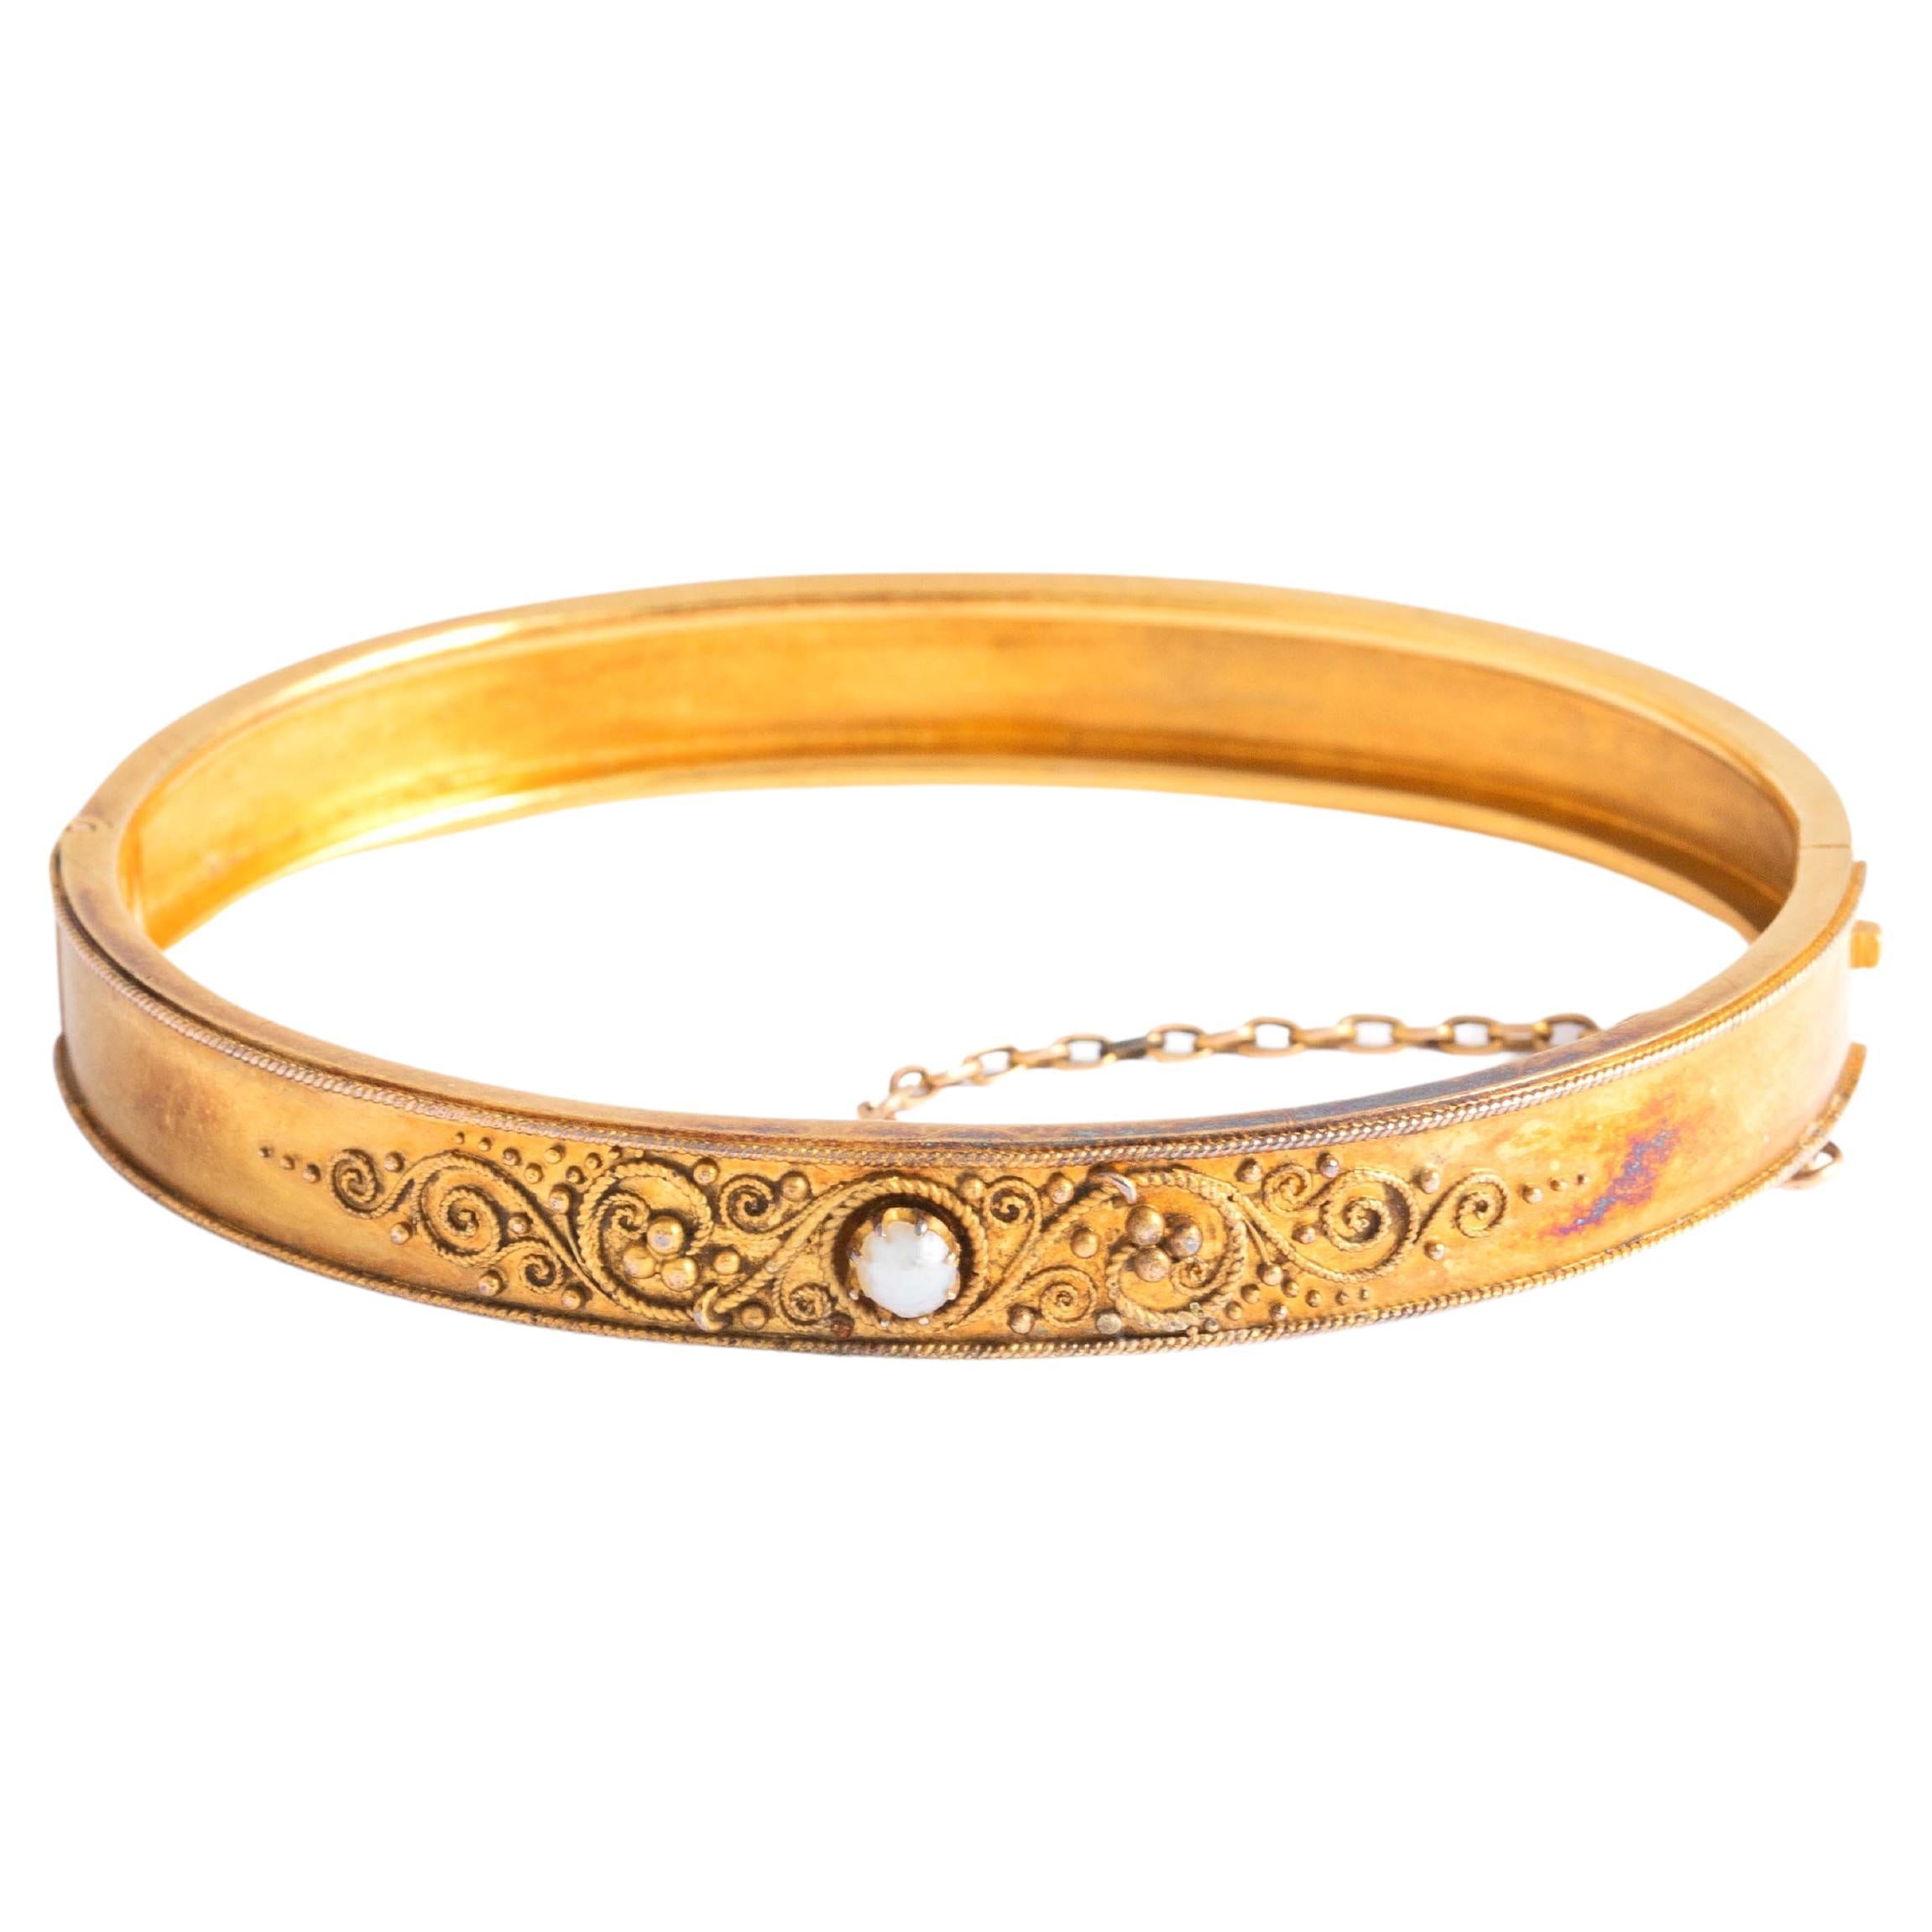 Antique Yellow Gold 18k Bangle Bracelet